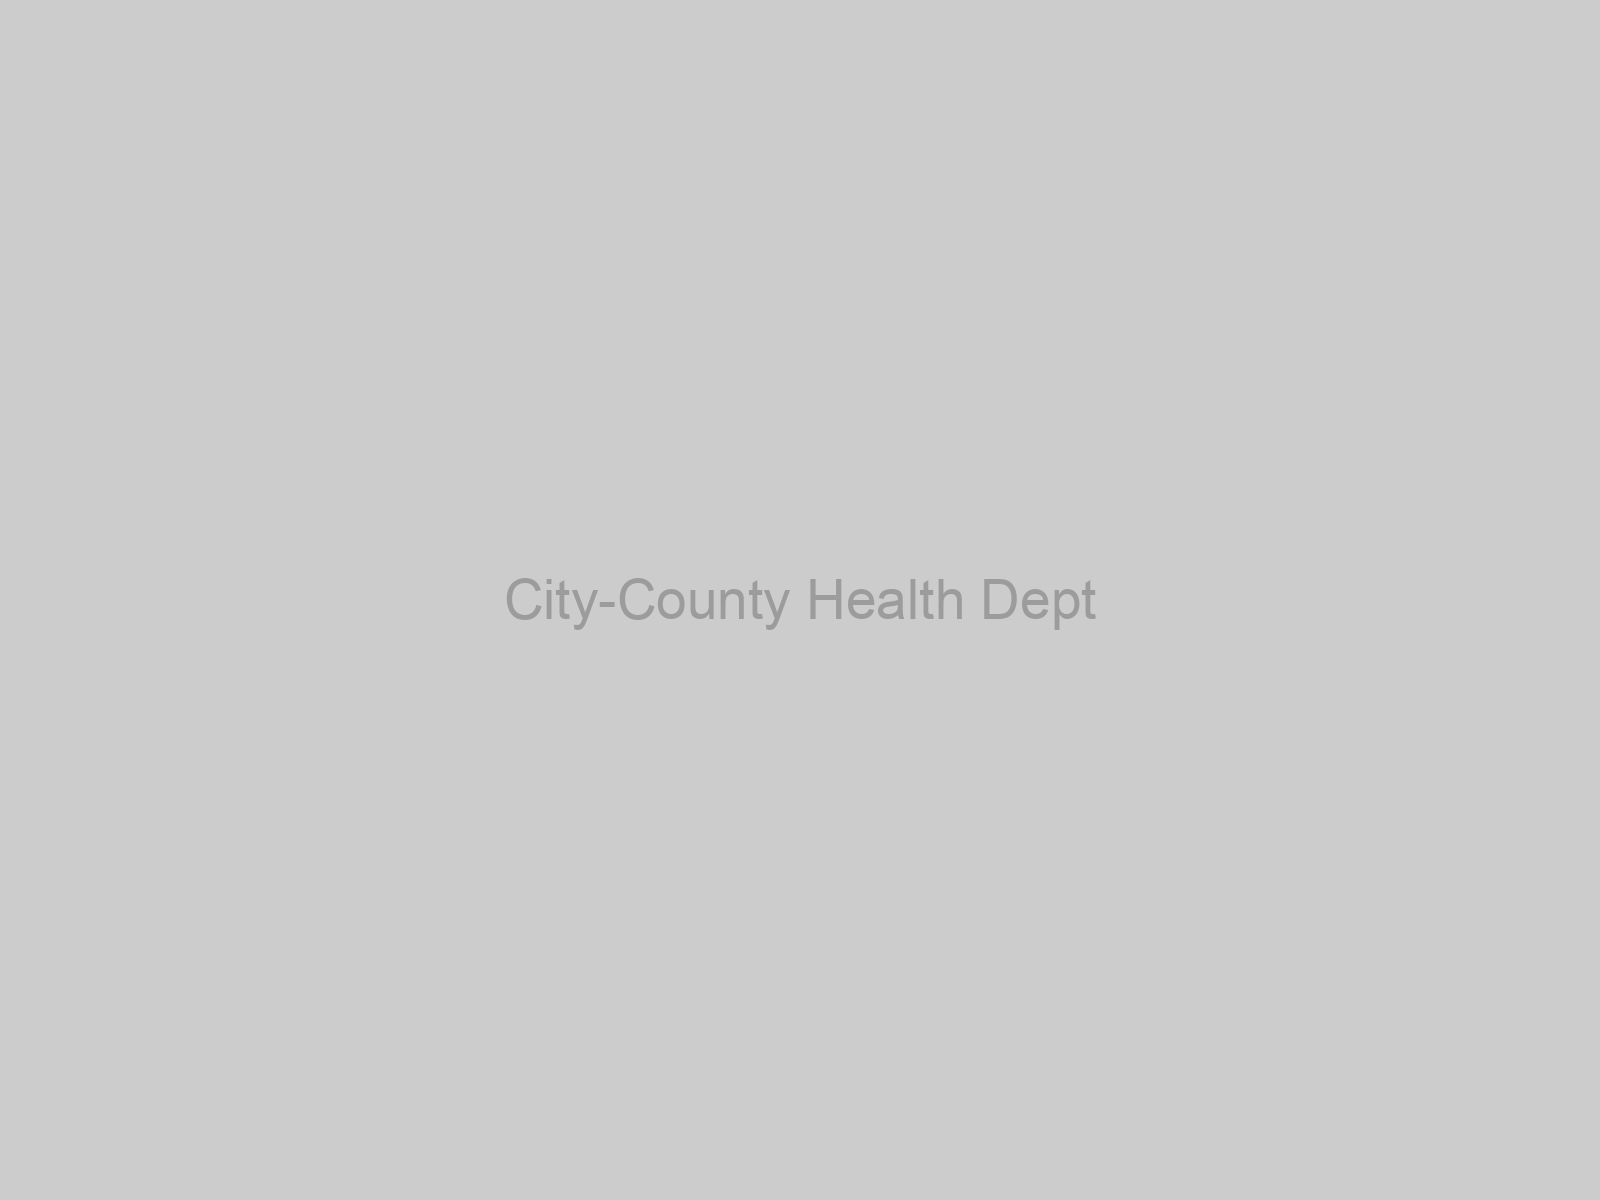 City-County Health Dept